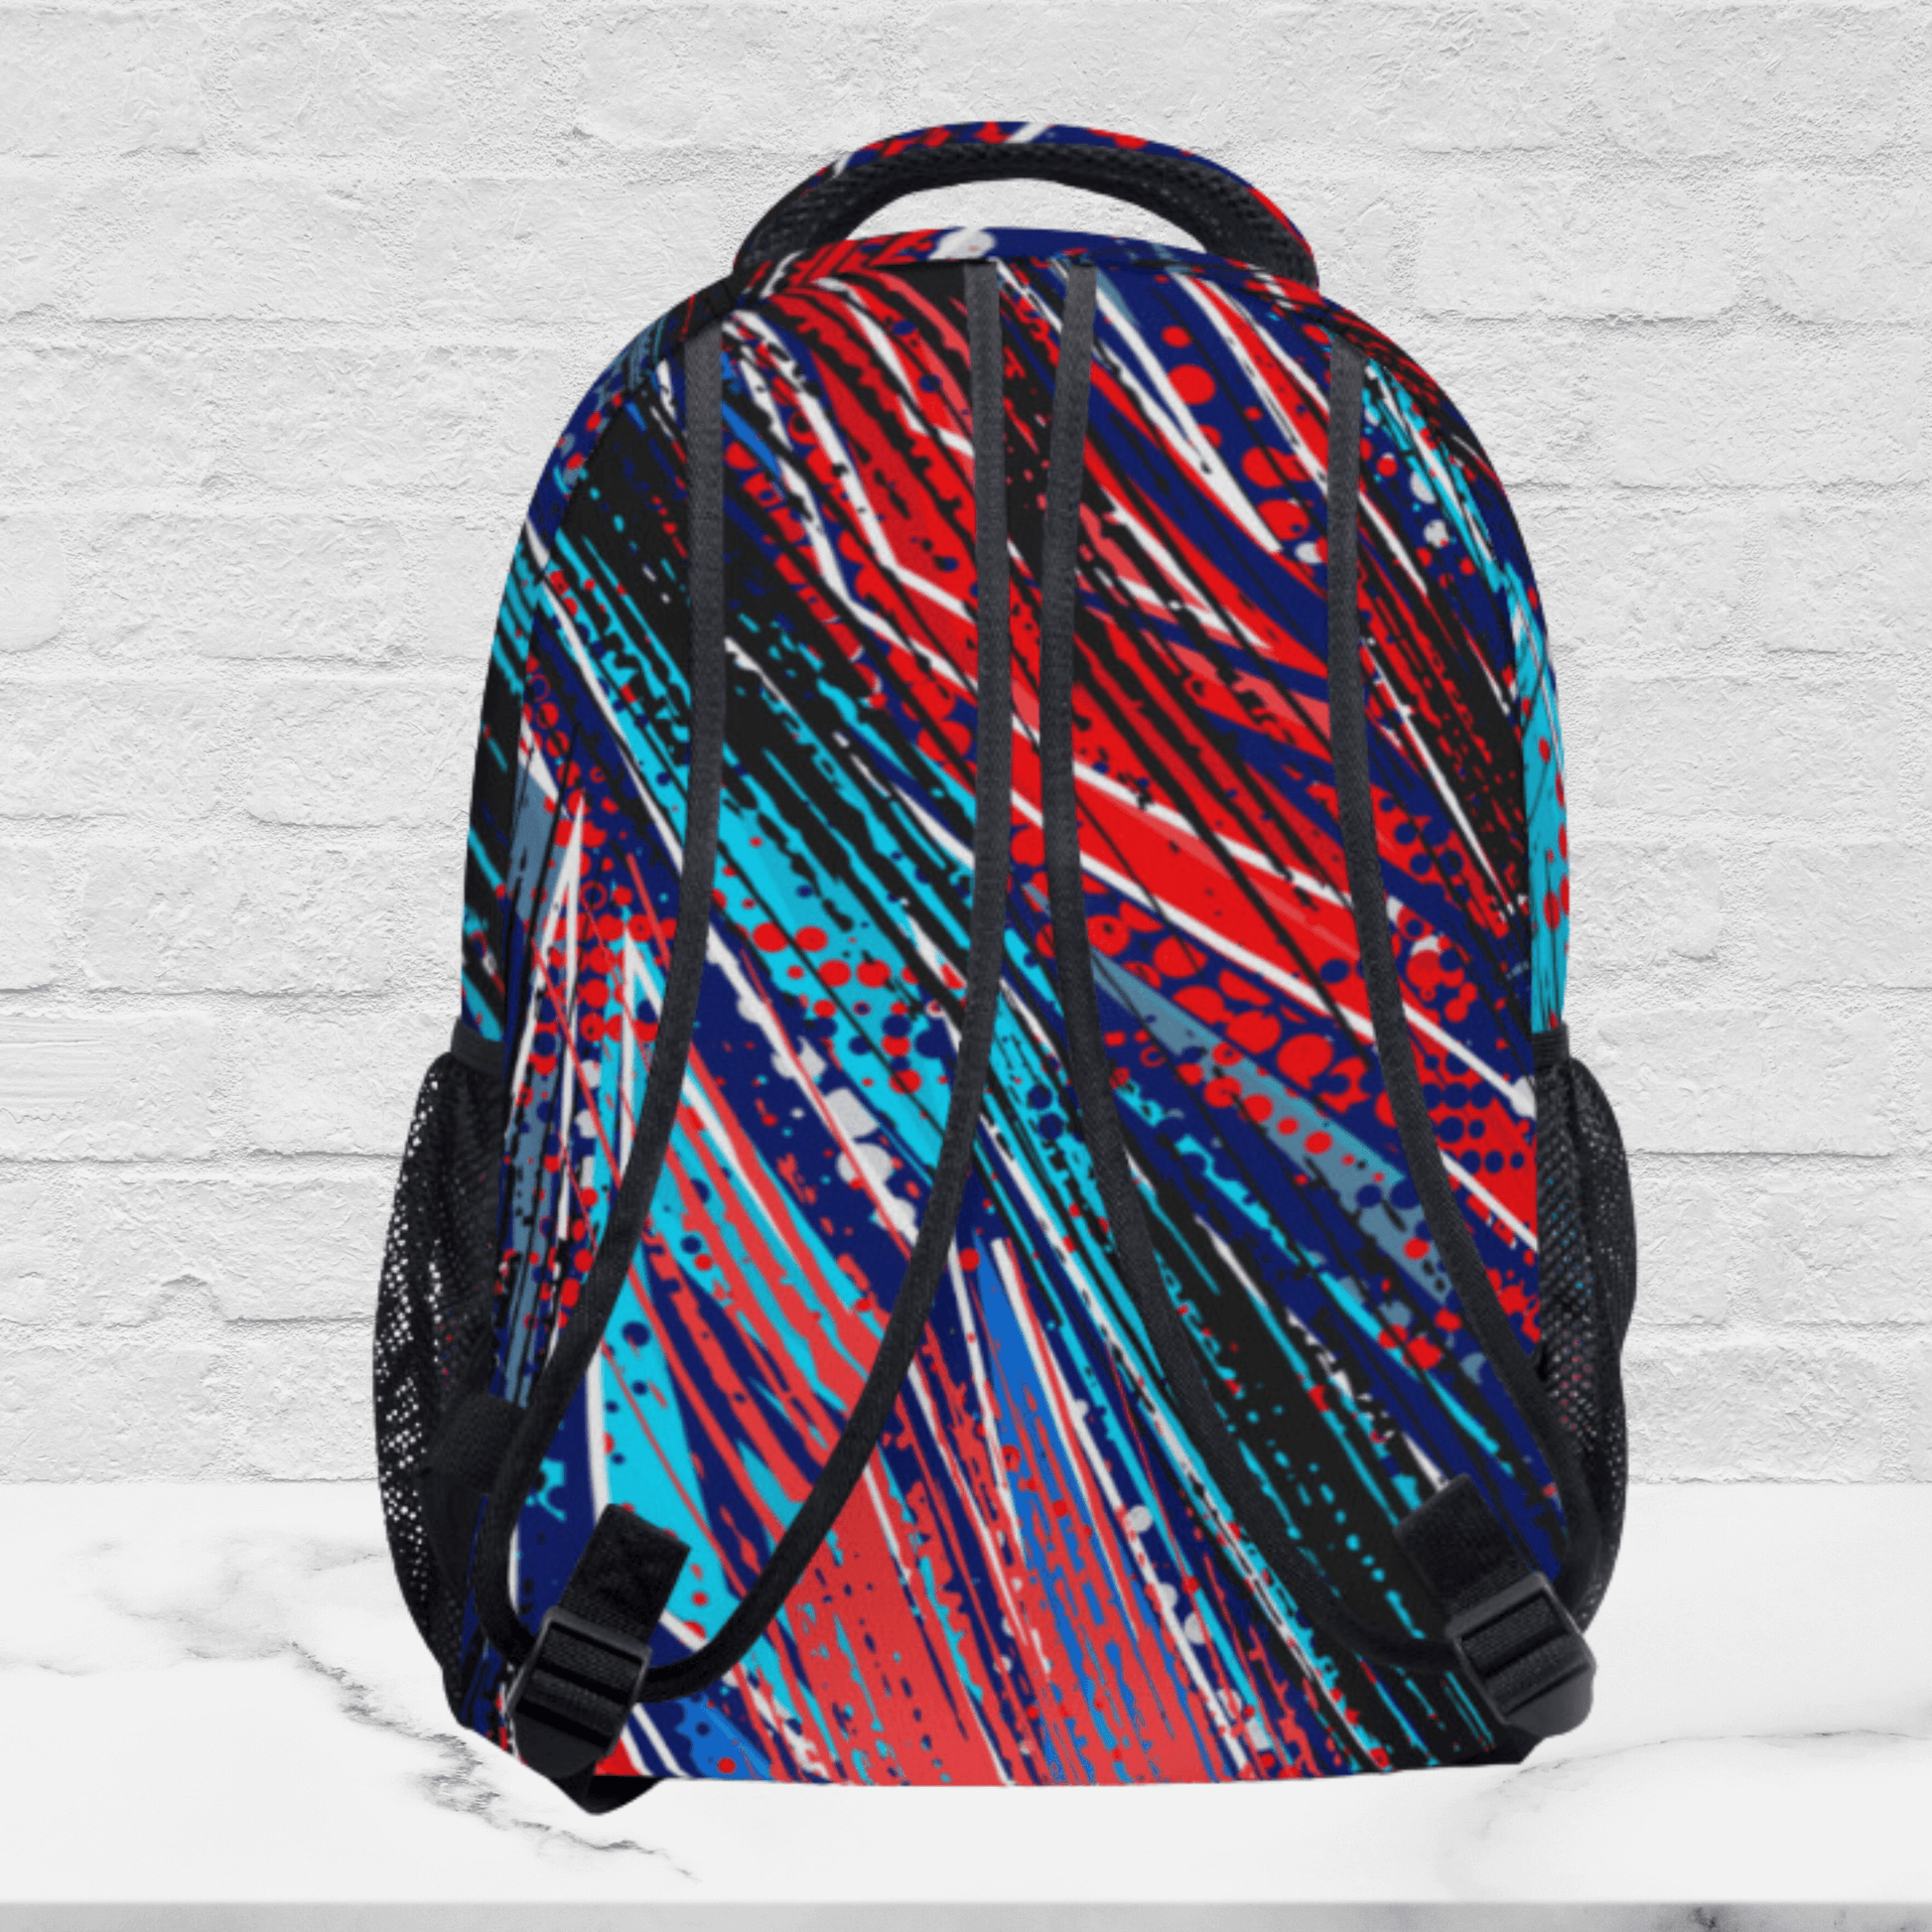 The backside of our backpack shows the same paint splatter pattern all over the padded shoulder straps and black adjusting buckles.